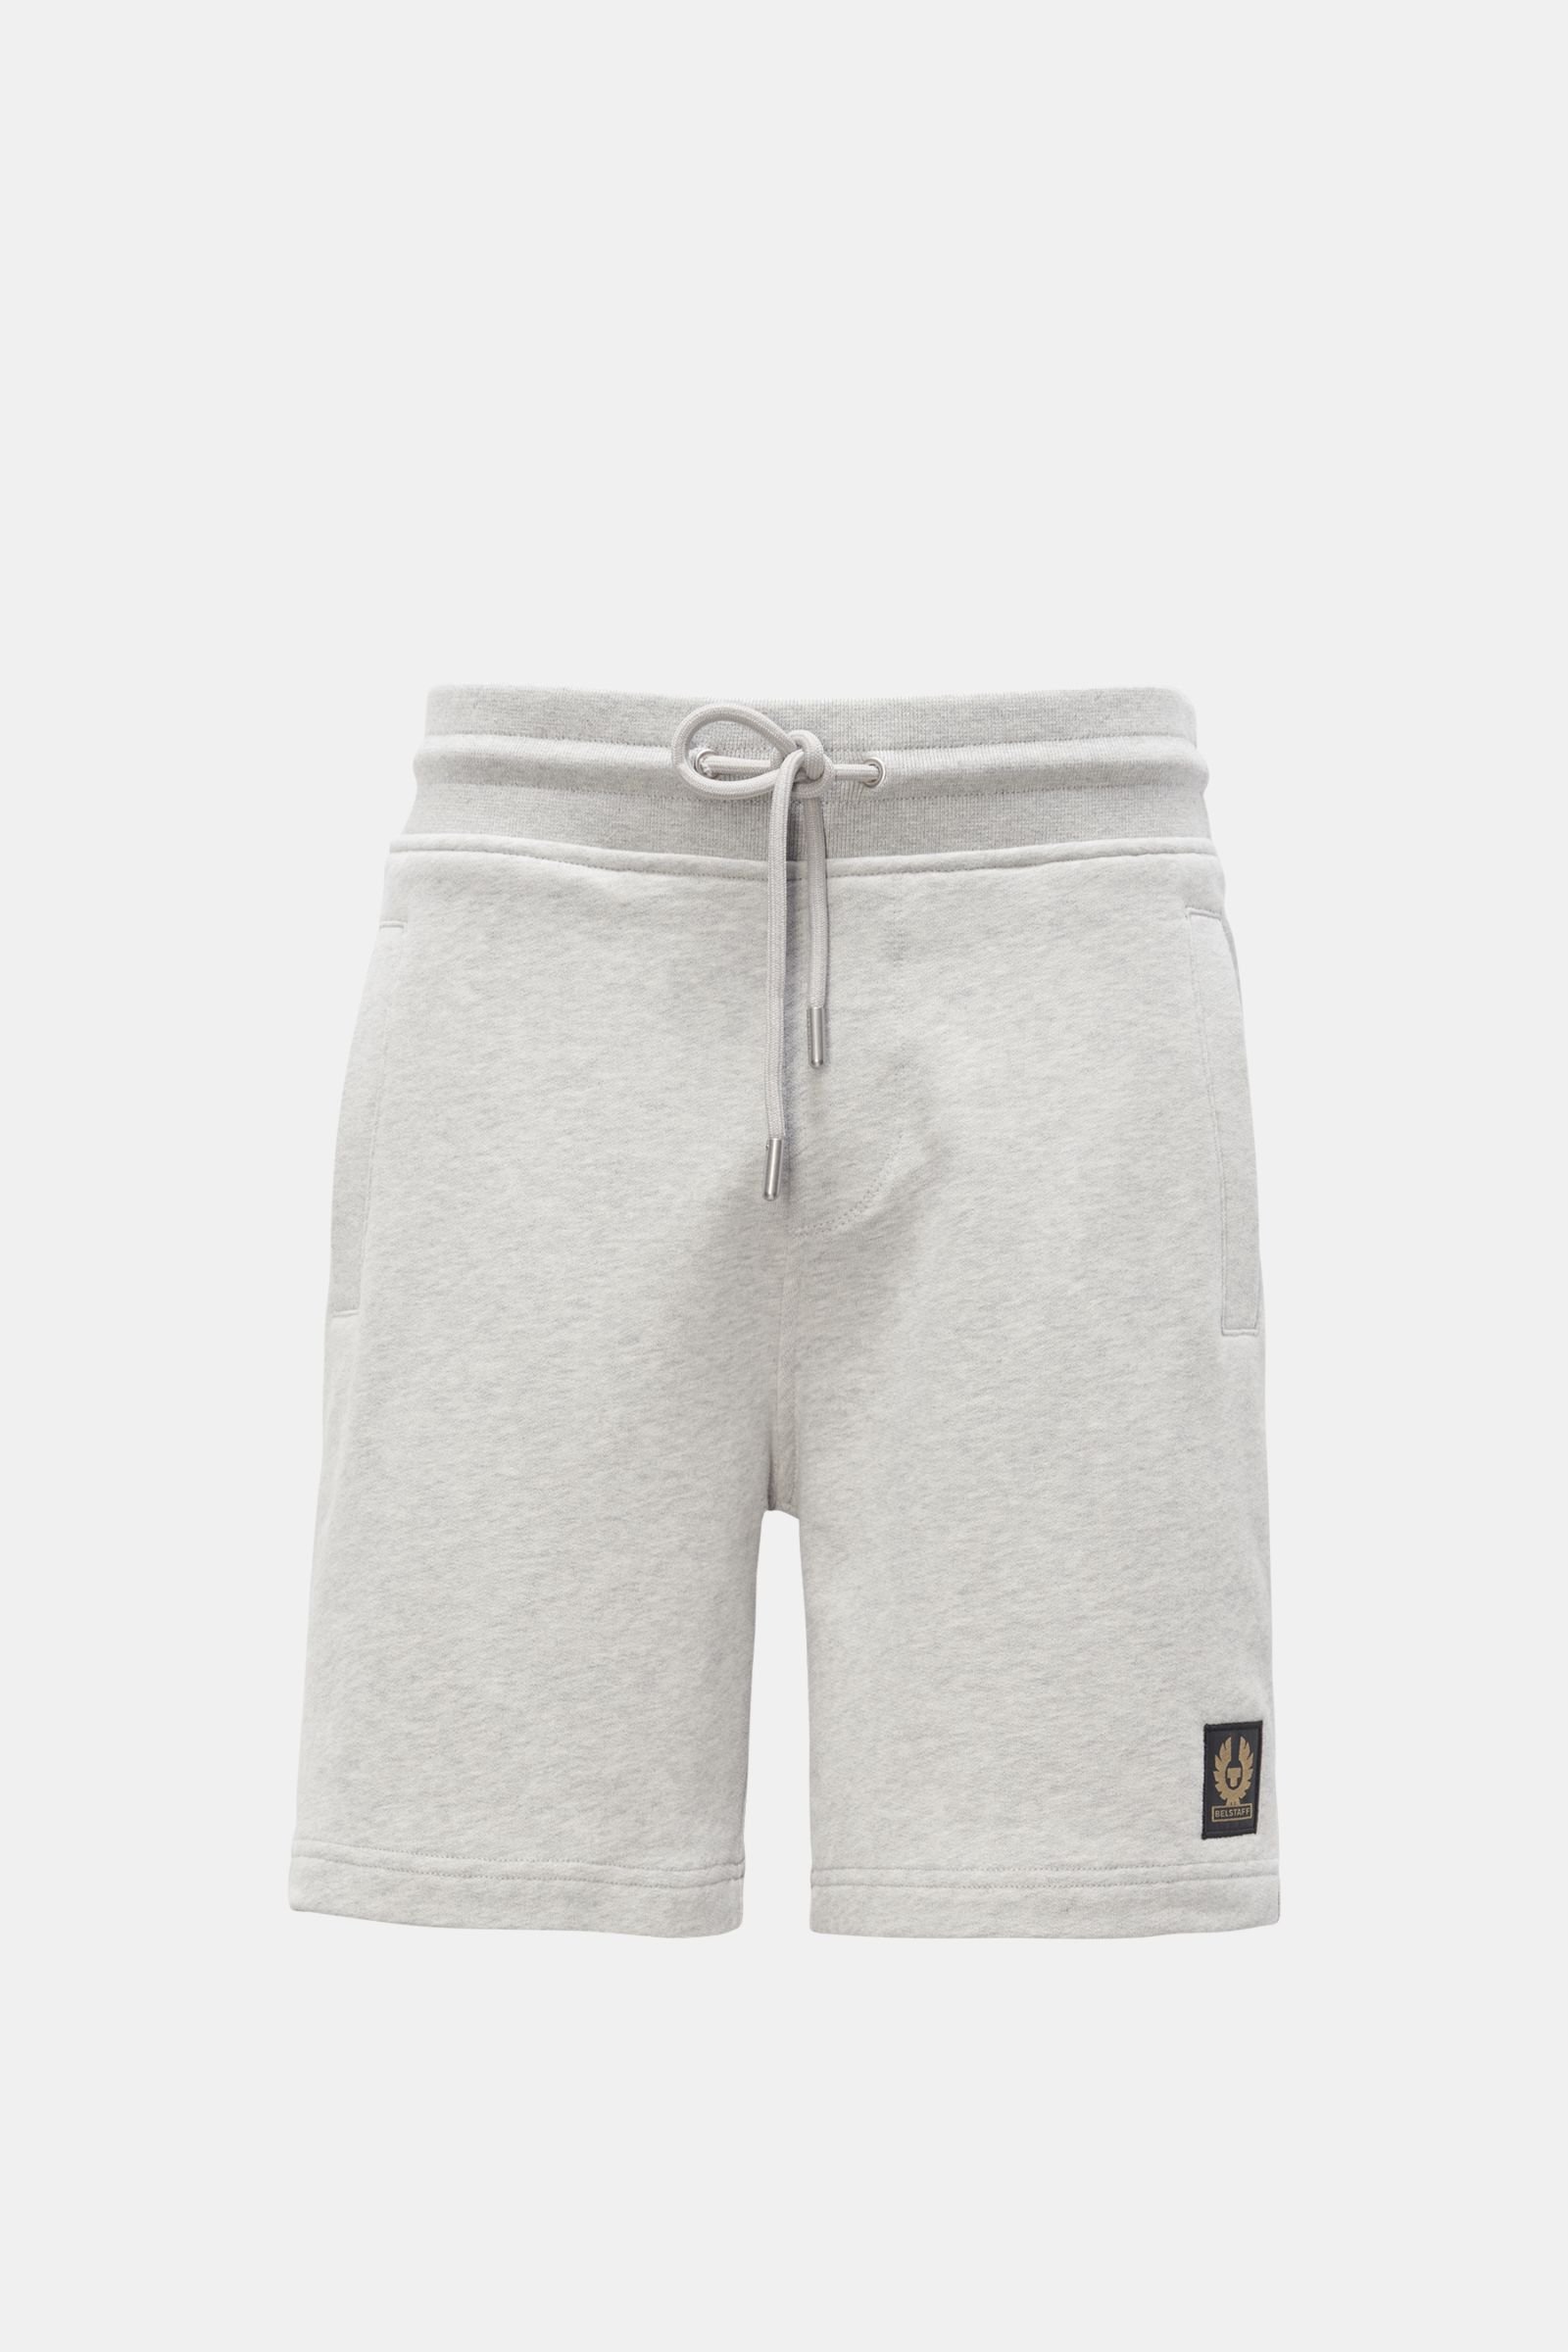 Sweat shorts light grey